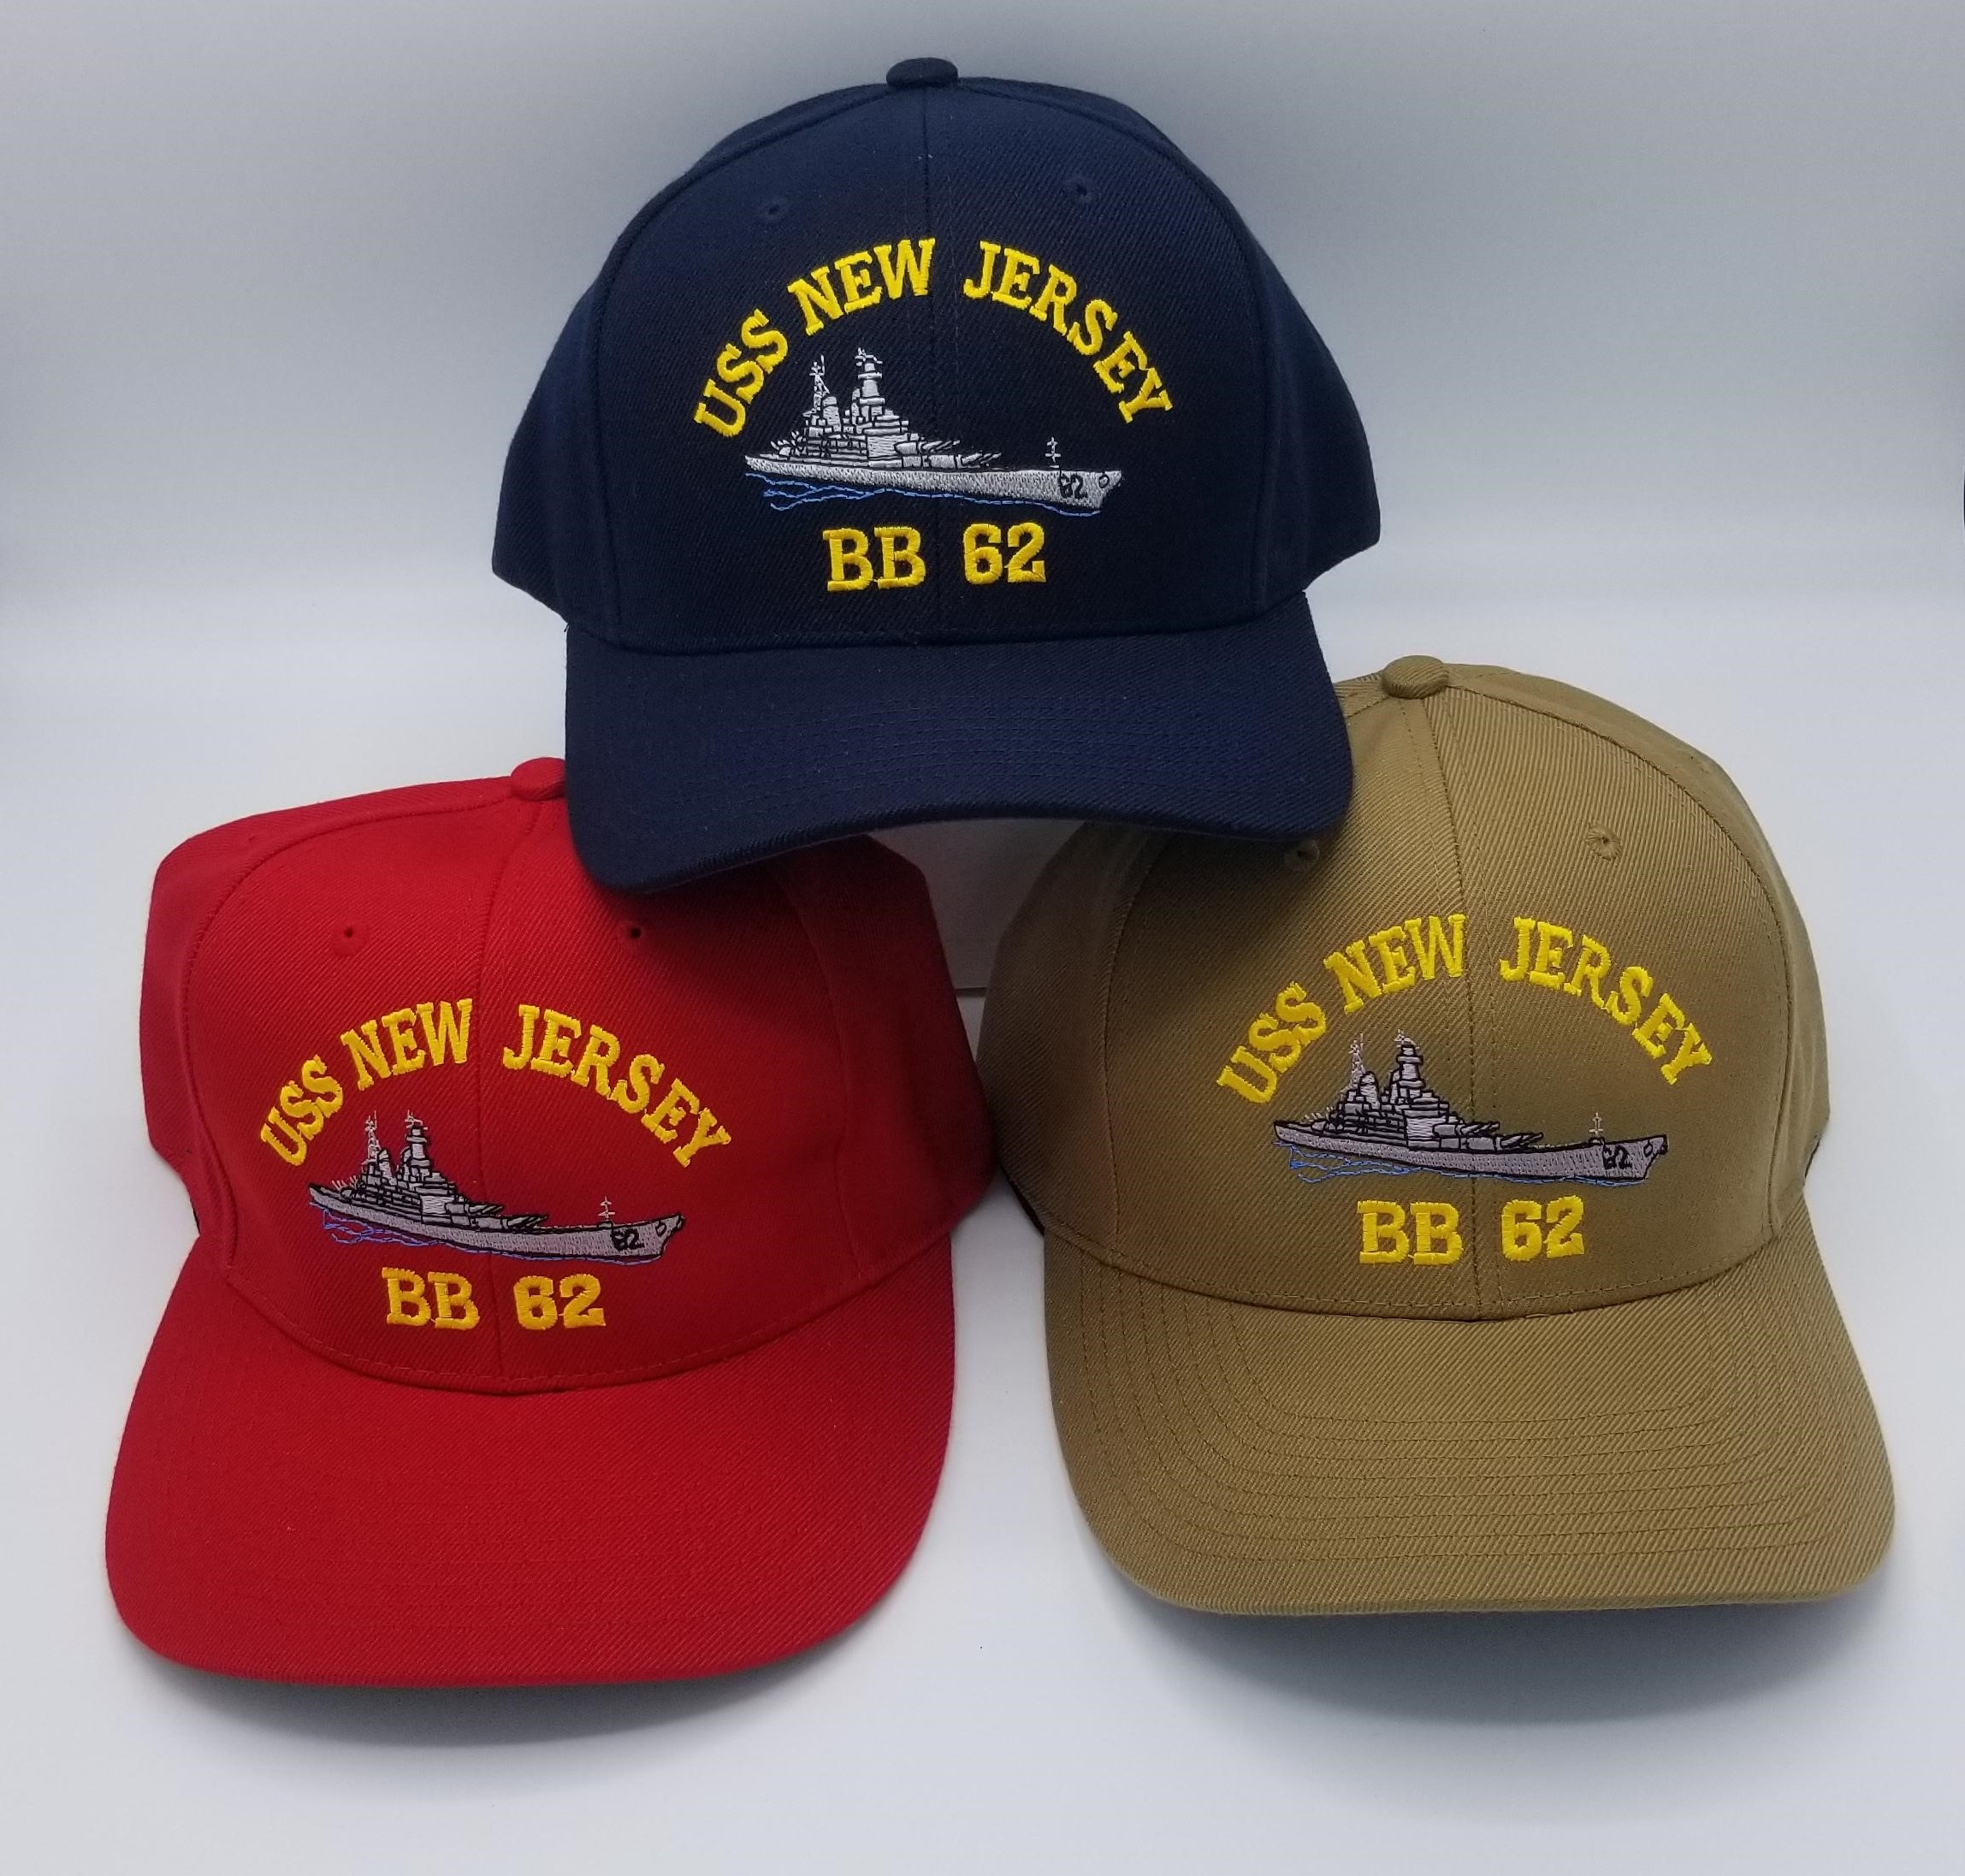 US Navy USS Ohio SSGN-726 USA Flag Unisex Adult Hats Classic Baseball Caps Sports Hat Peaked Cap